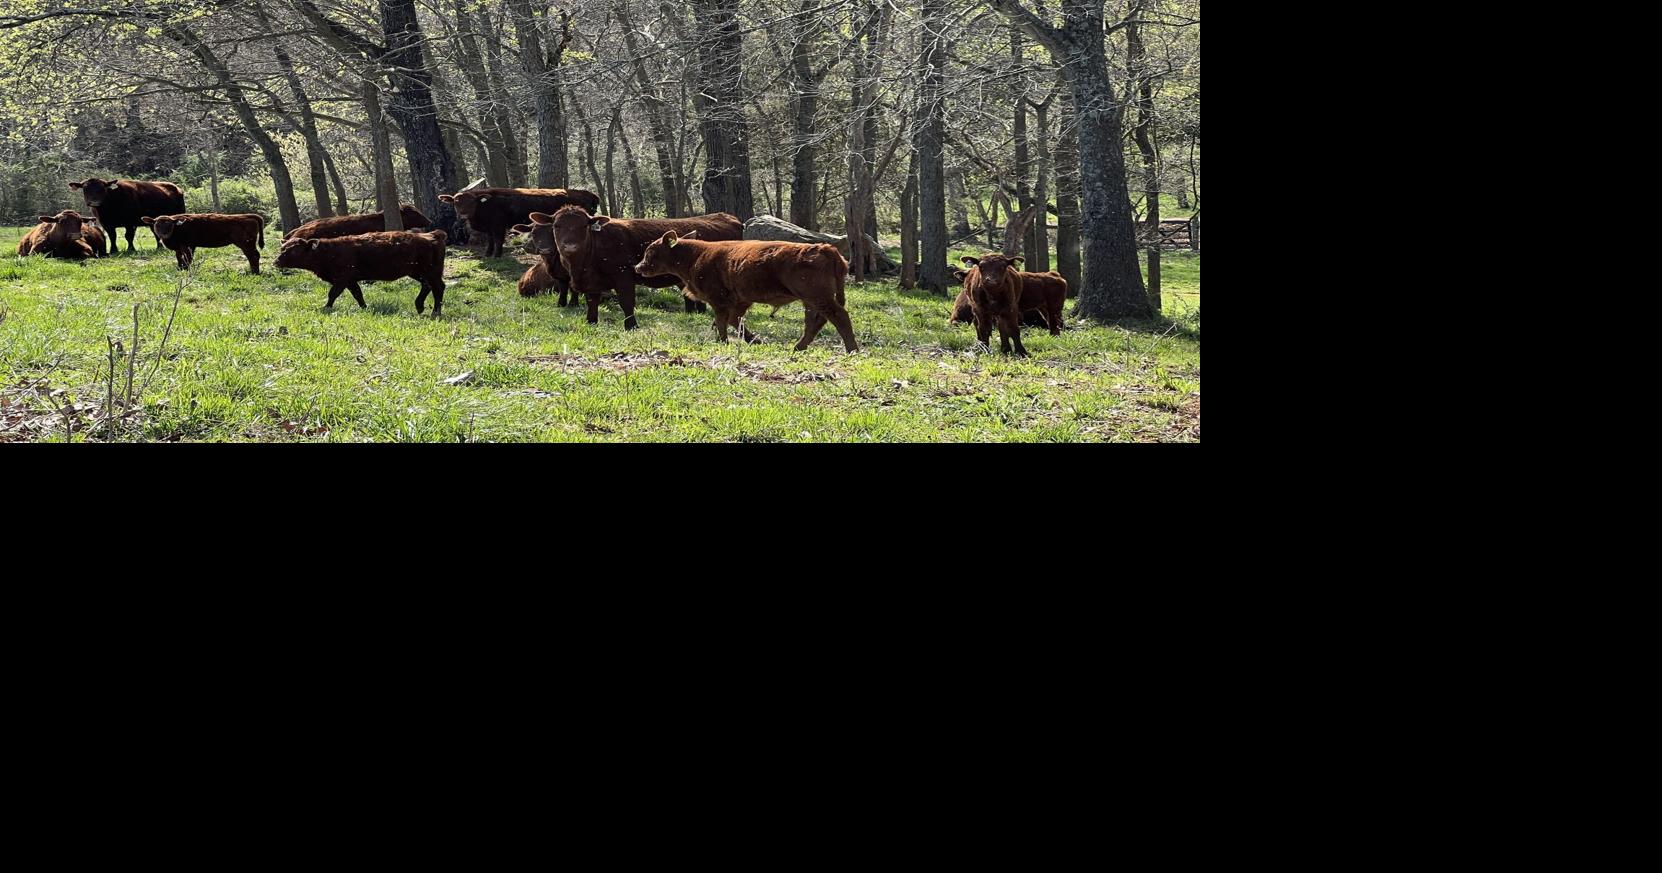 Lakota Ranch to host grazing management field day - Culpeper Star-Exponent